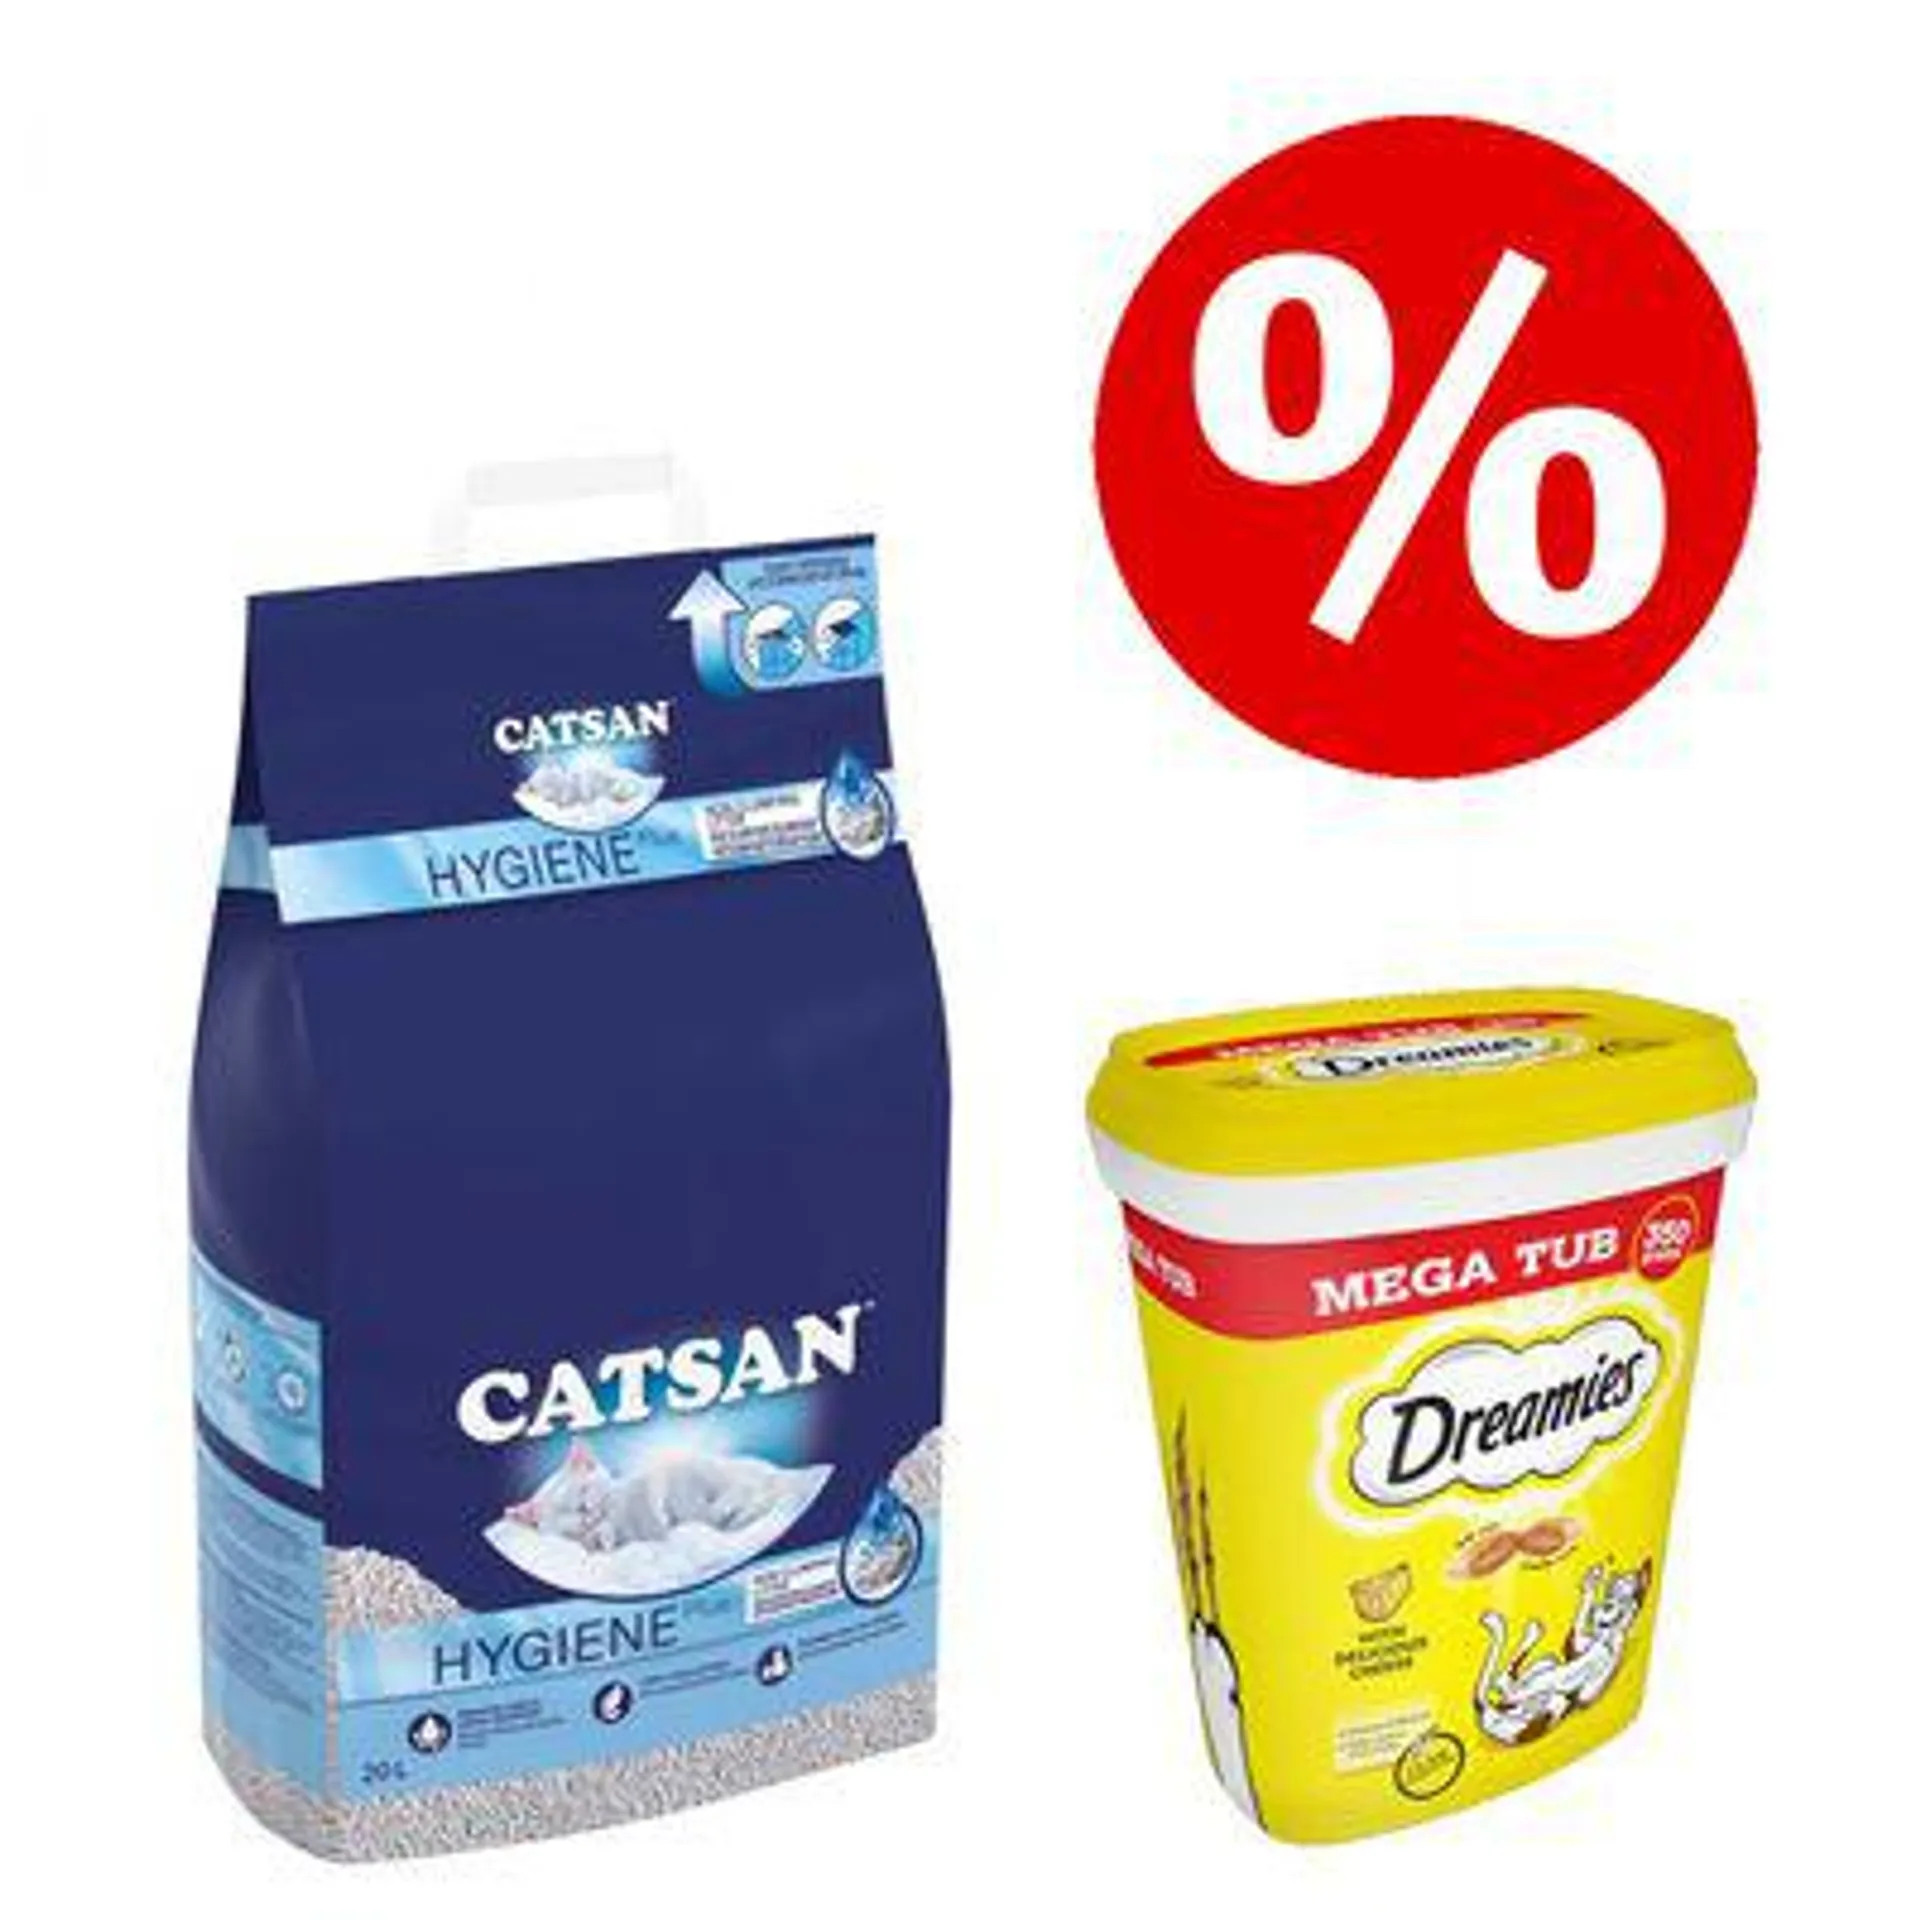 20l Catsan Hygiene Plus Cat Litter + Dreamies Cat Treats - Bundle Pack!*